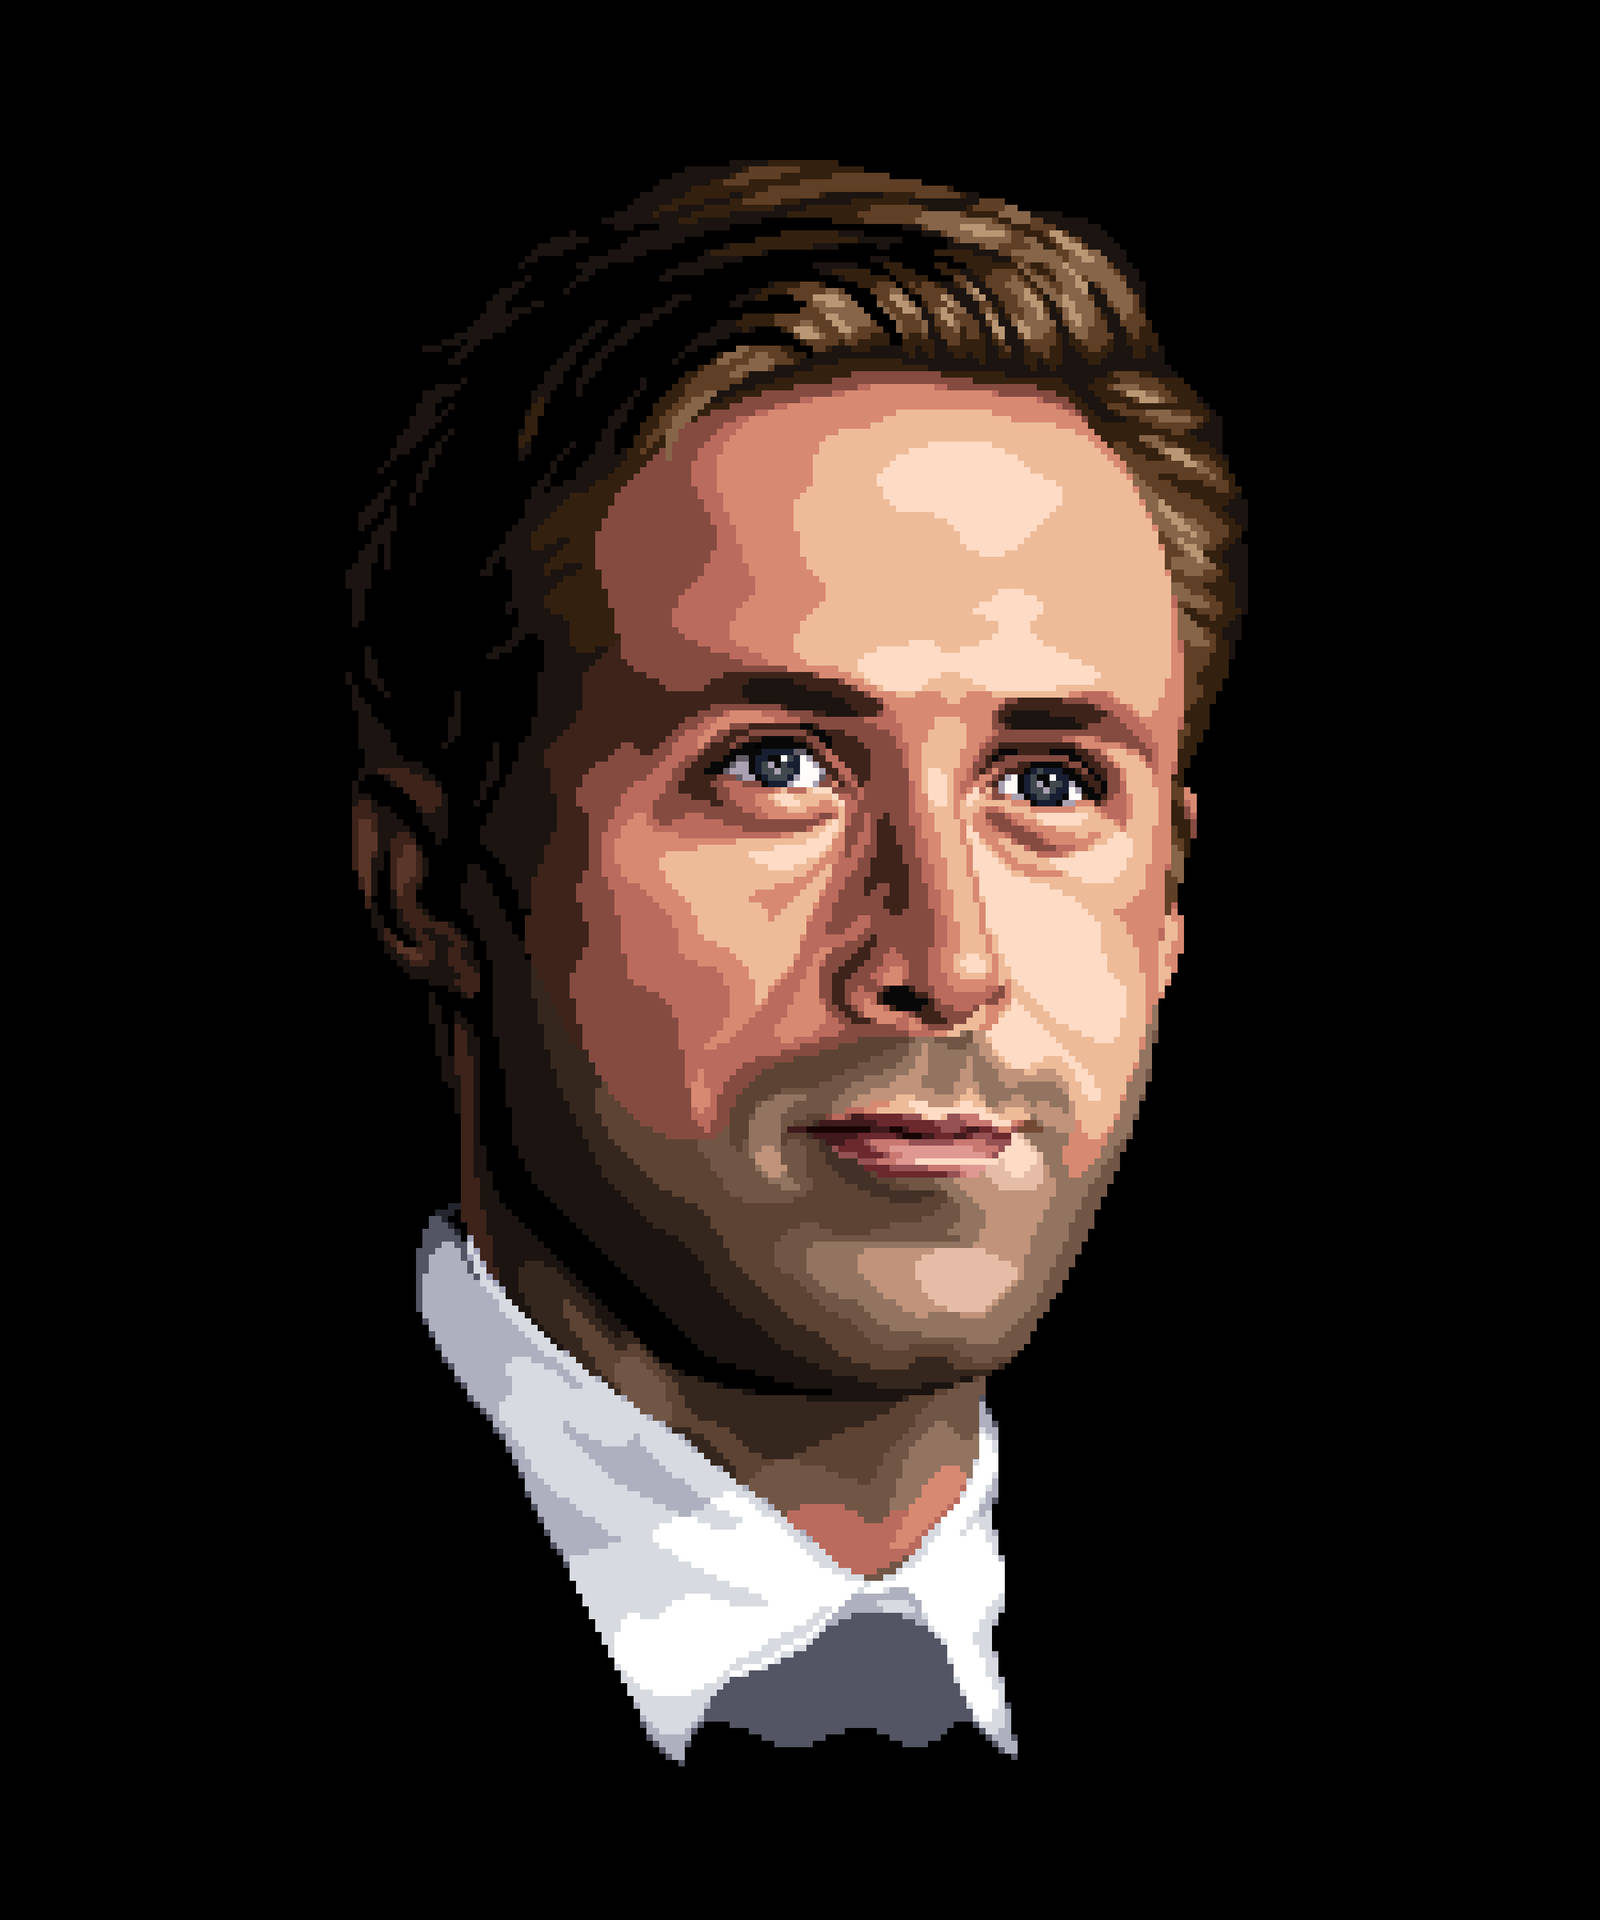 Ryan Gosling Digital Painting Background